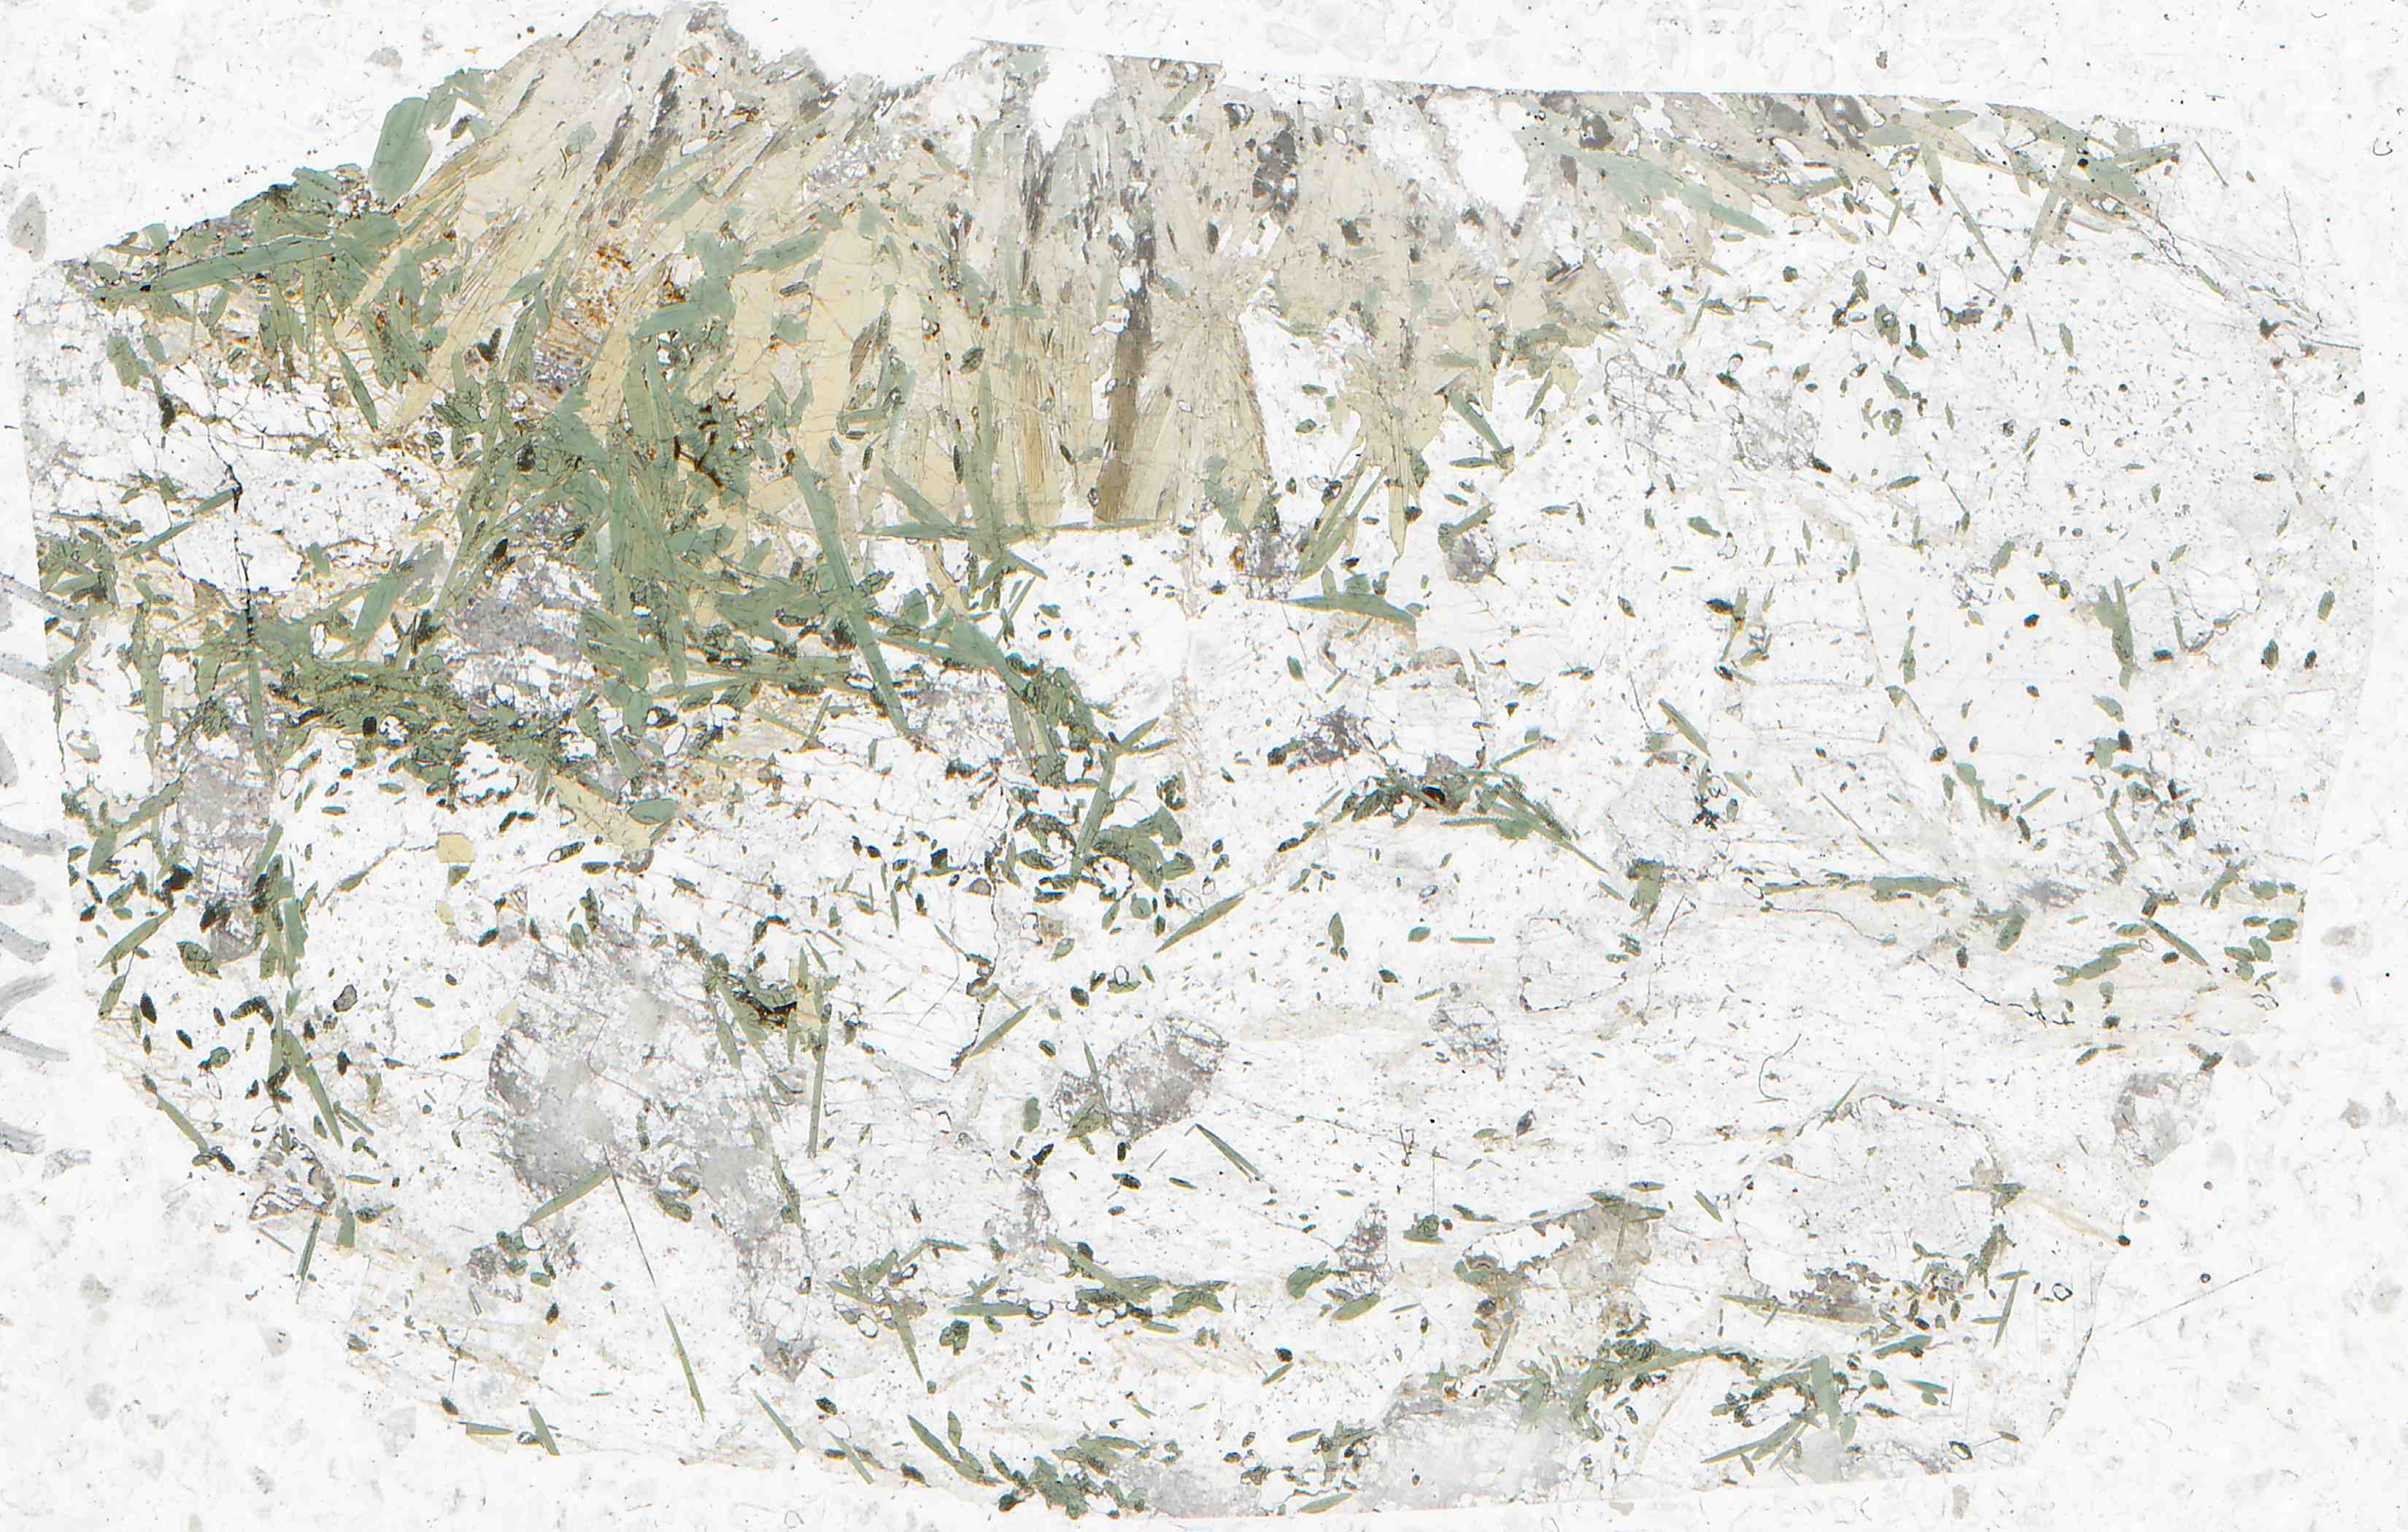 Lovozero Kola Russia lamprophyllite syenite in thin section